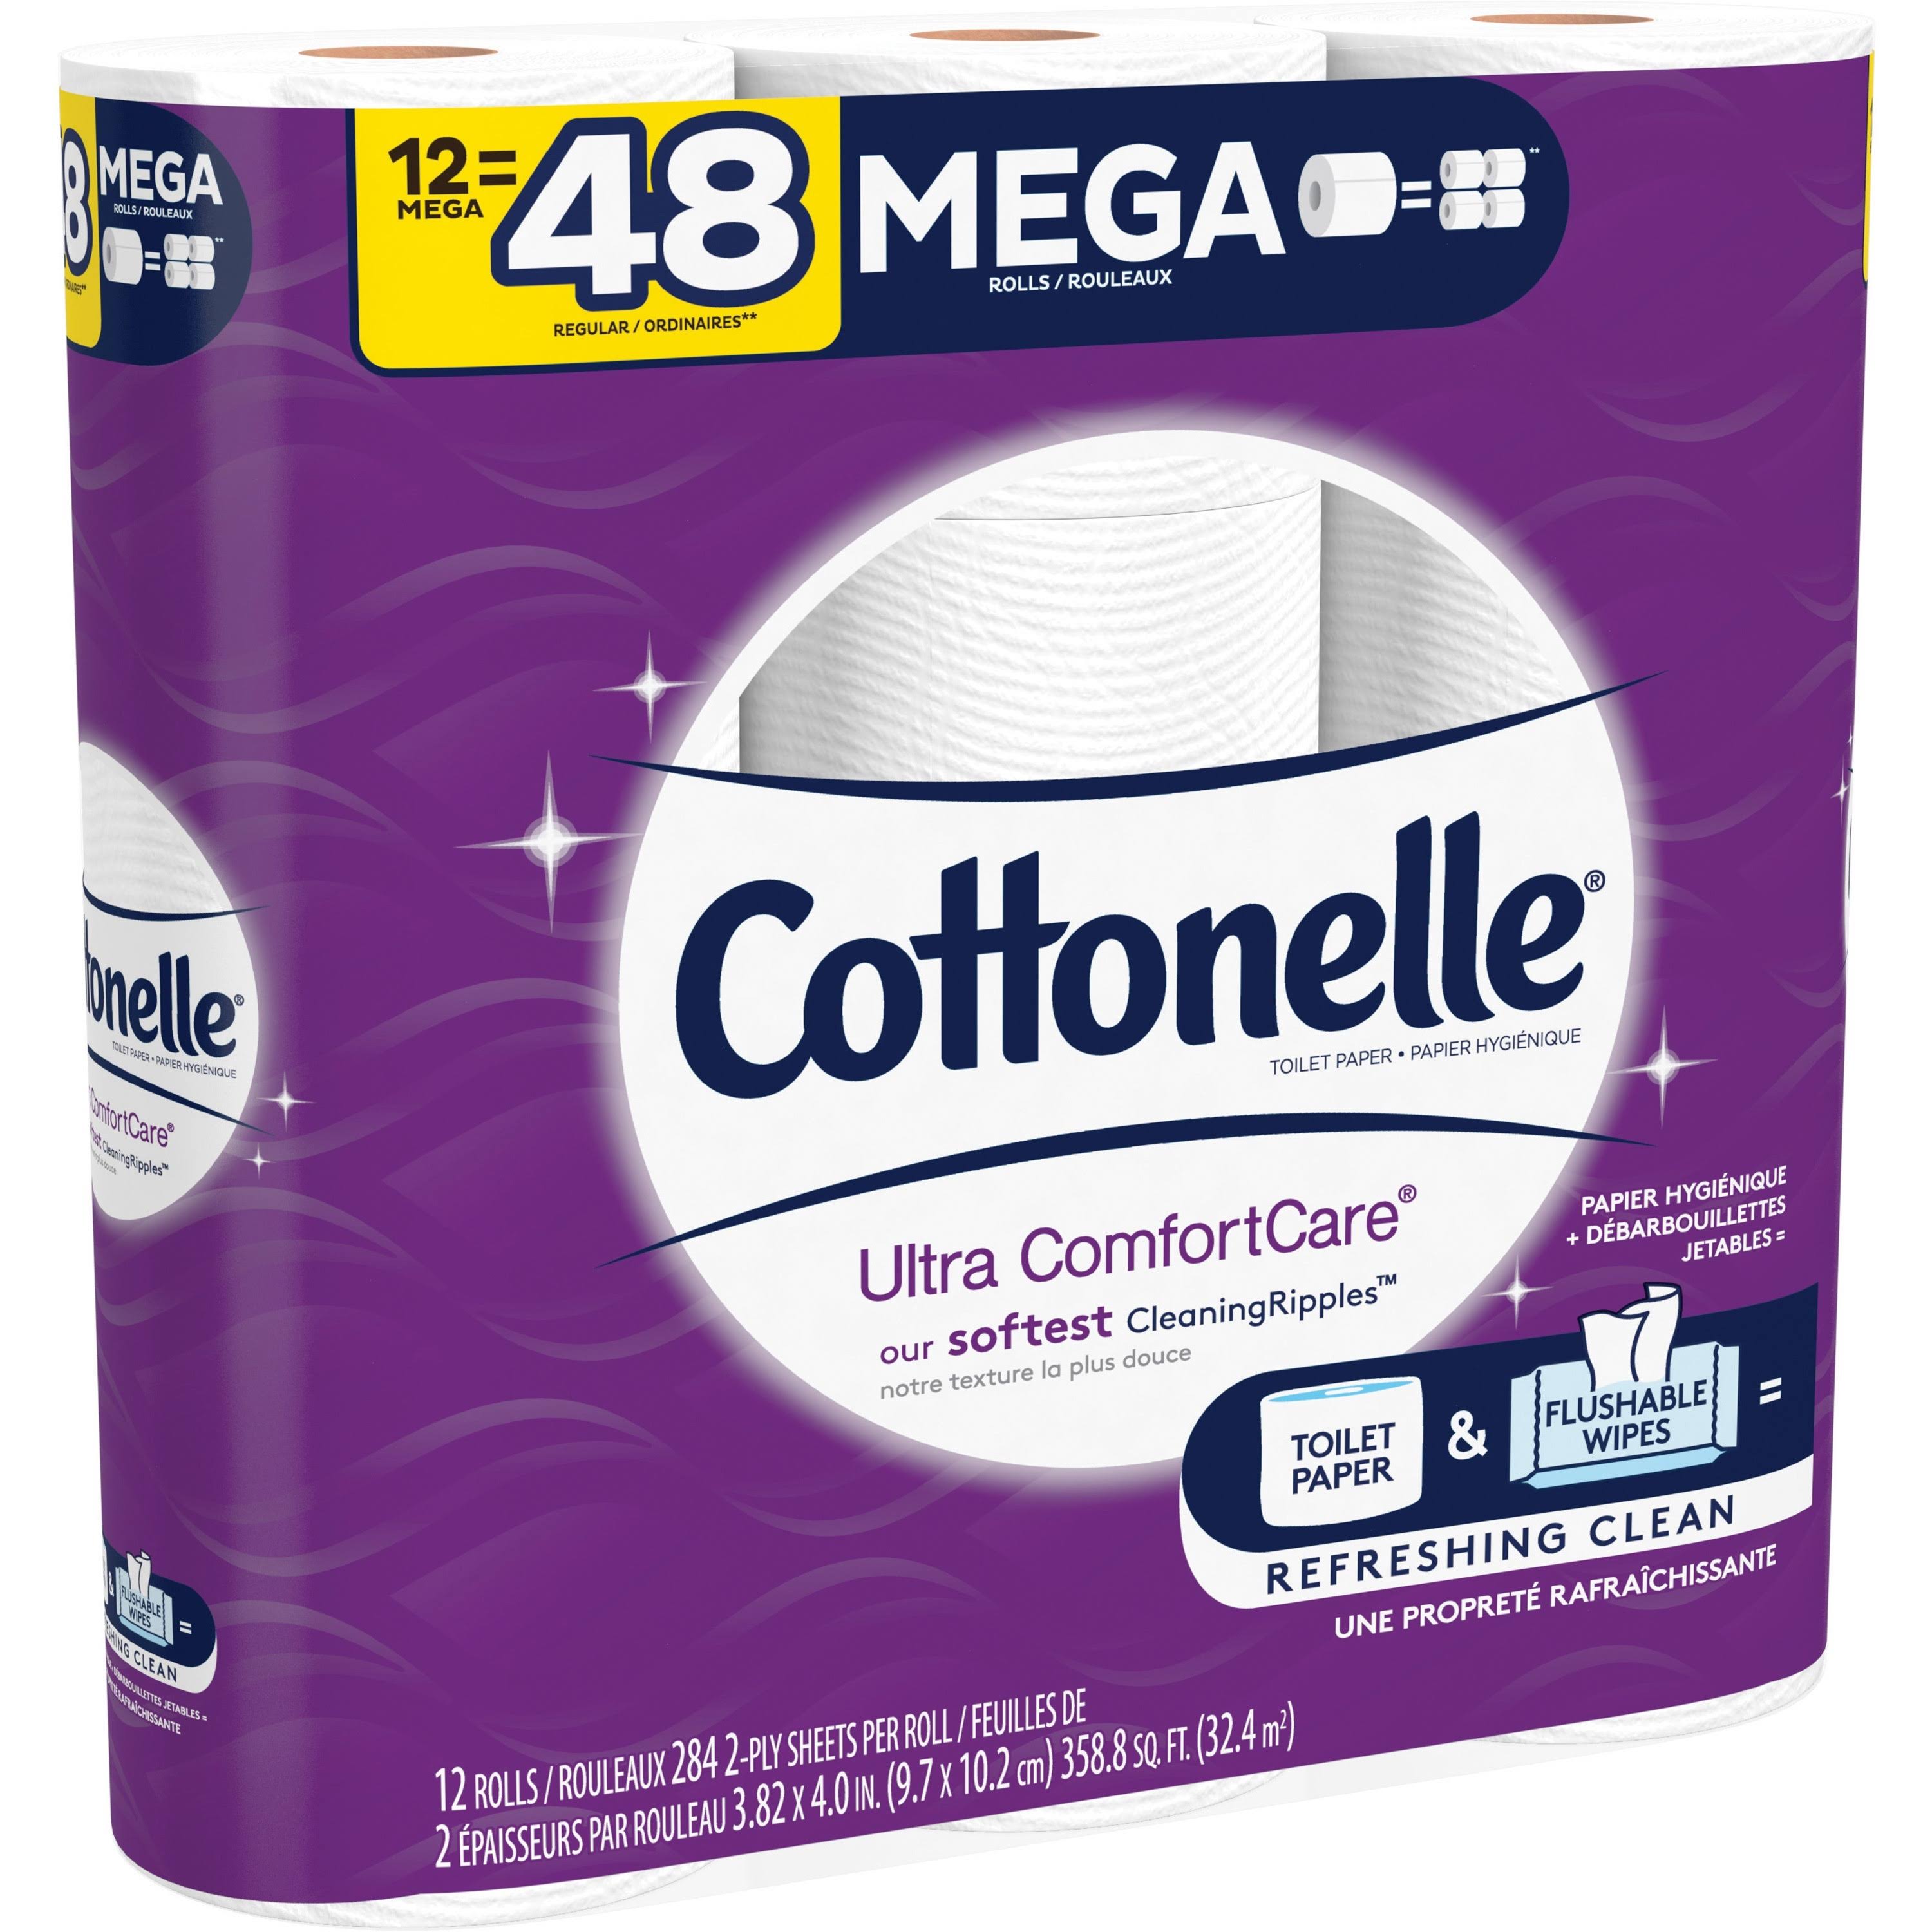 Cottonelle Ultra ComfortCare Toilet Paper, Mega Roll, 2-Ply - 12 rolls